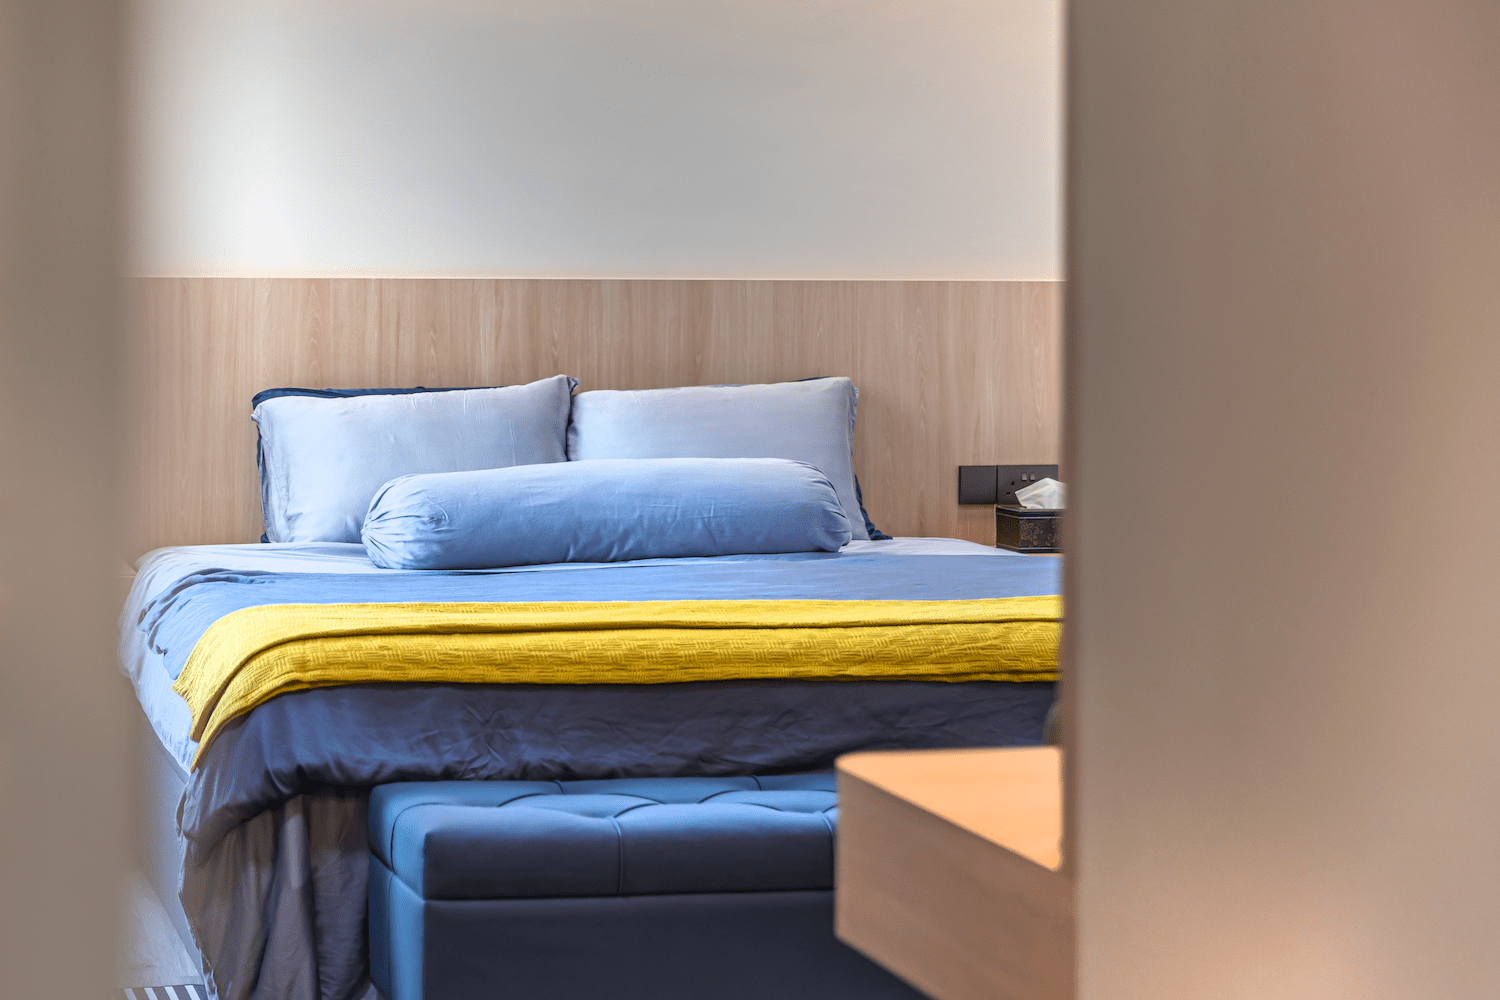 Kitchenate Rivervale Crescent 3 bedder condo bedroom 3